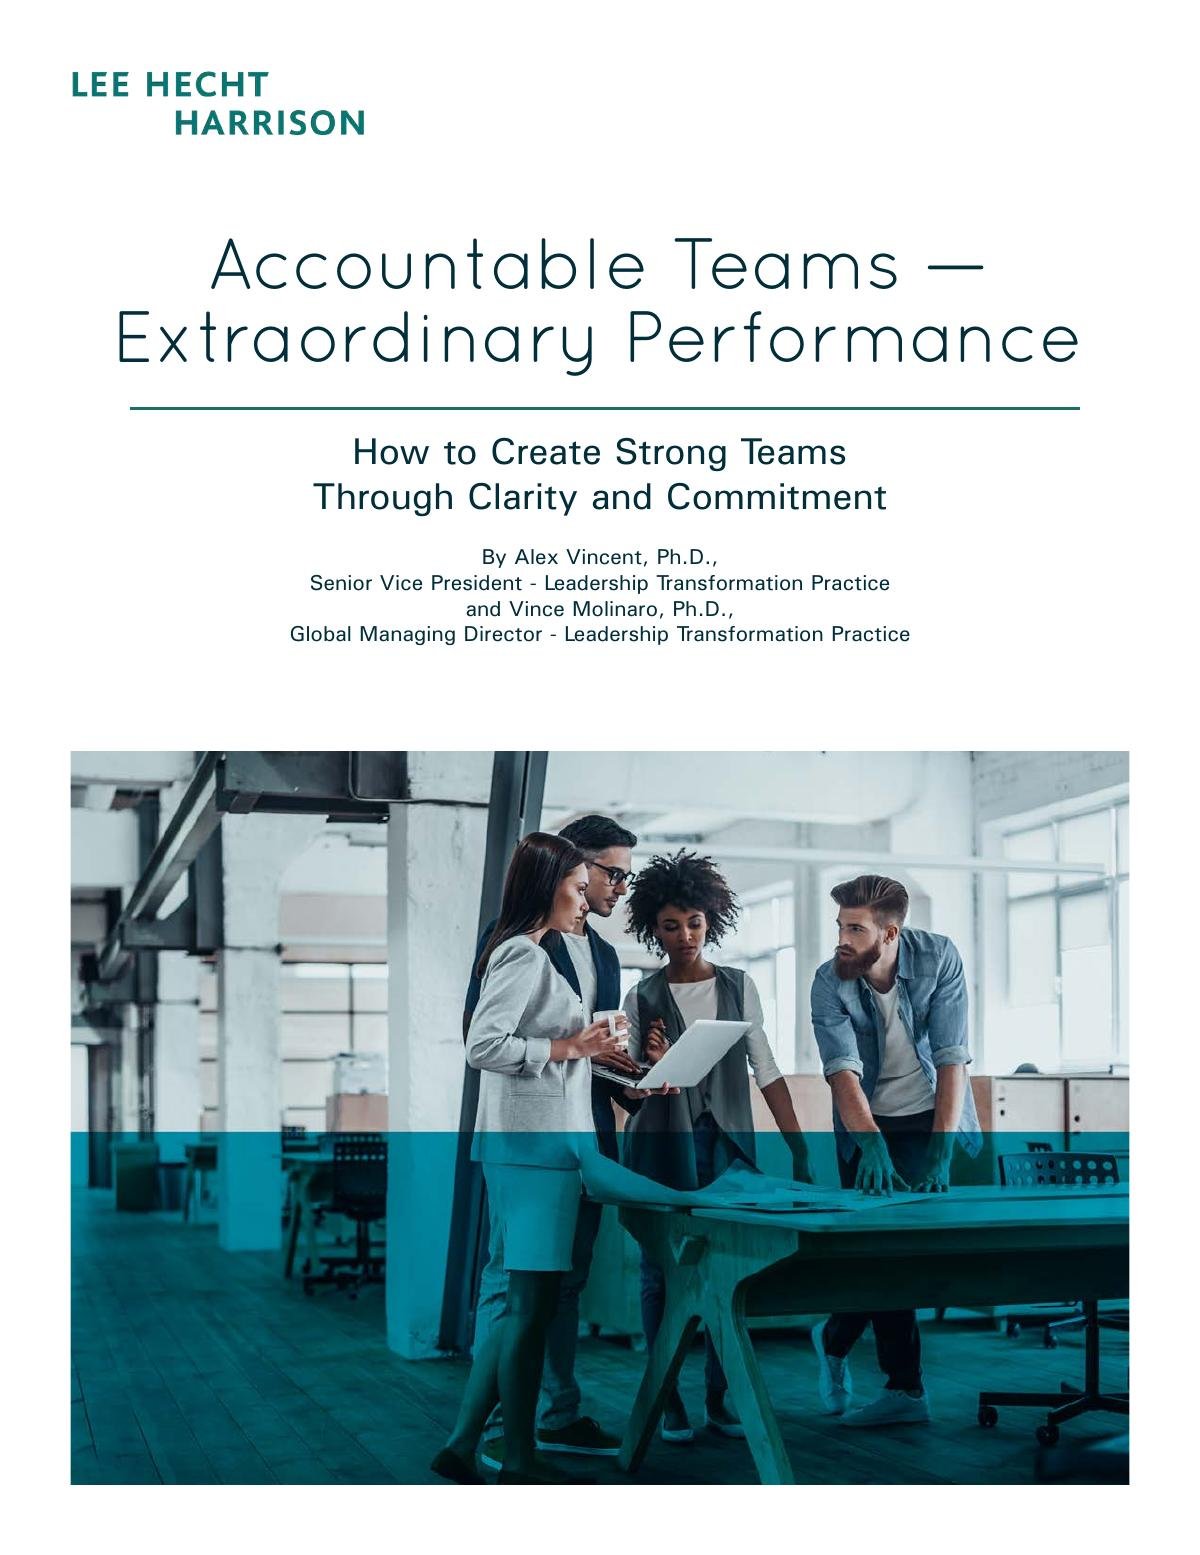 Accountable Teams, Extraordinary Performance